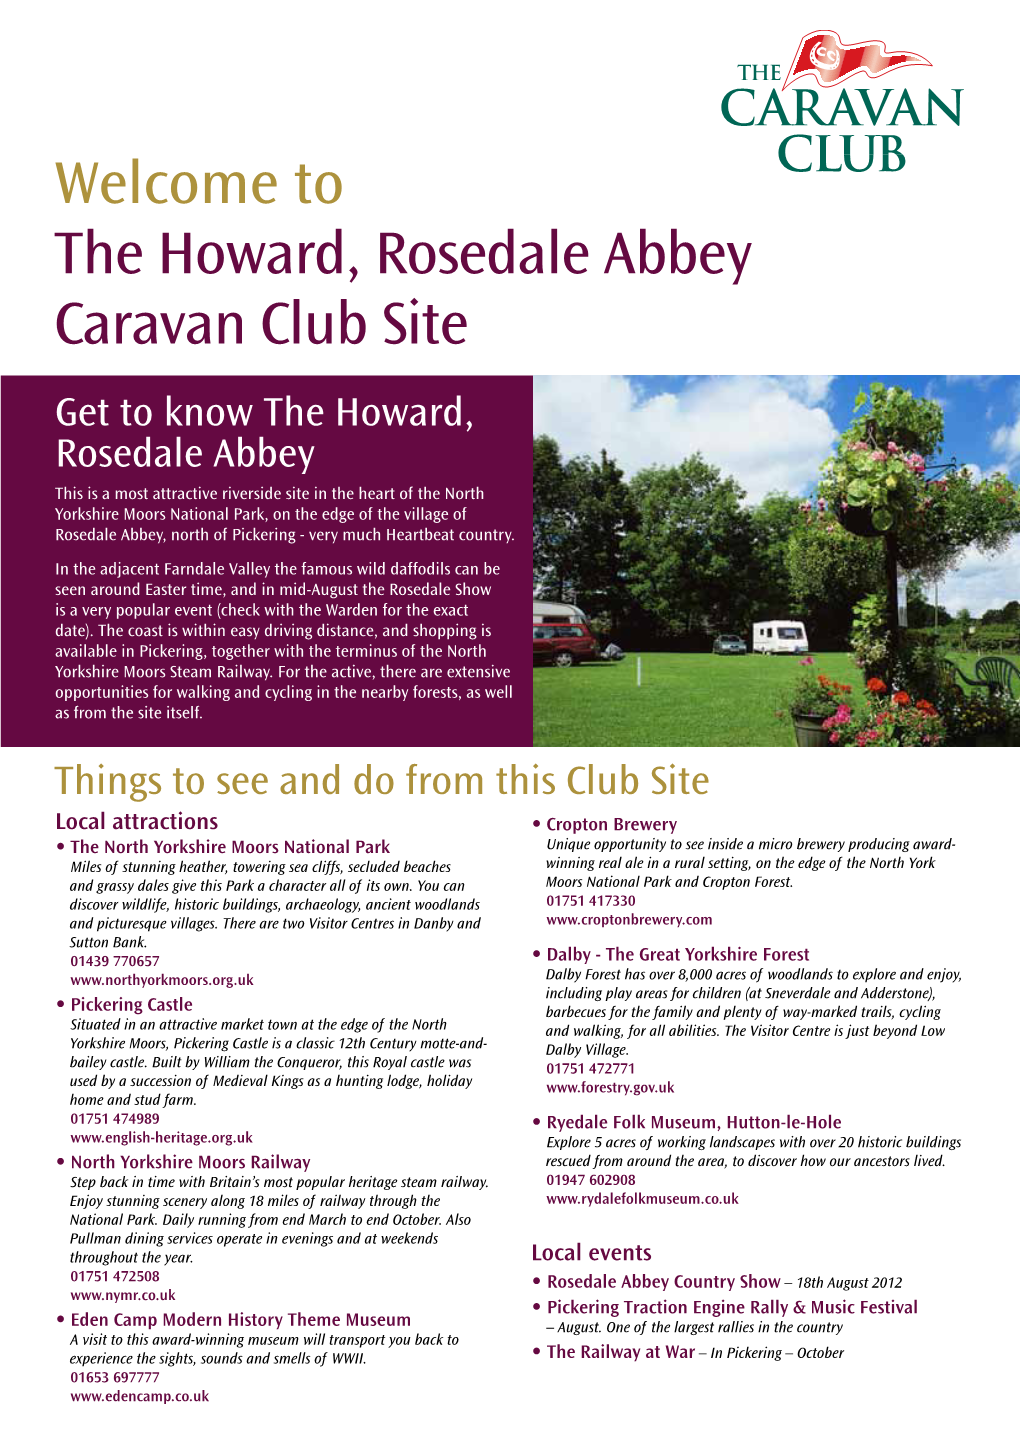 Welcome to the Howard, Rosedale Abbey Caravan Club Site